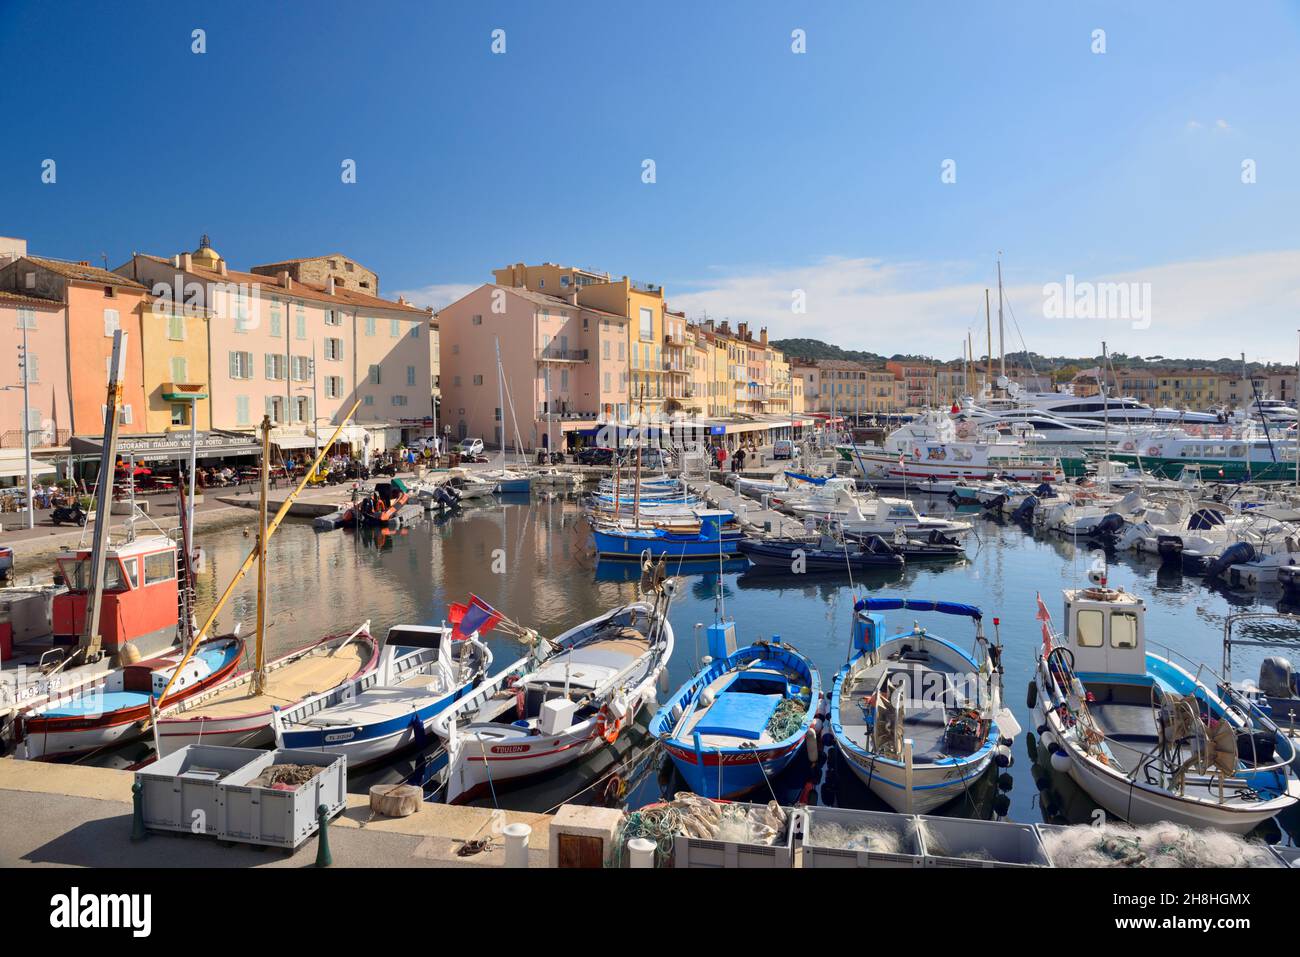 France, Var, Saint-Tropez, quai Jean Jaurès, fisherman's boats in the old port Stock Photo